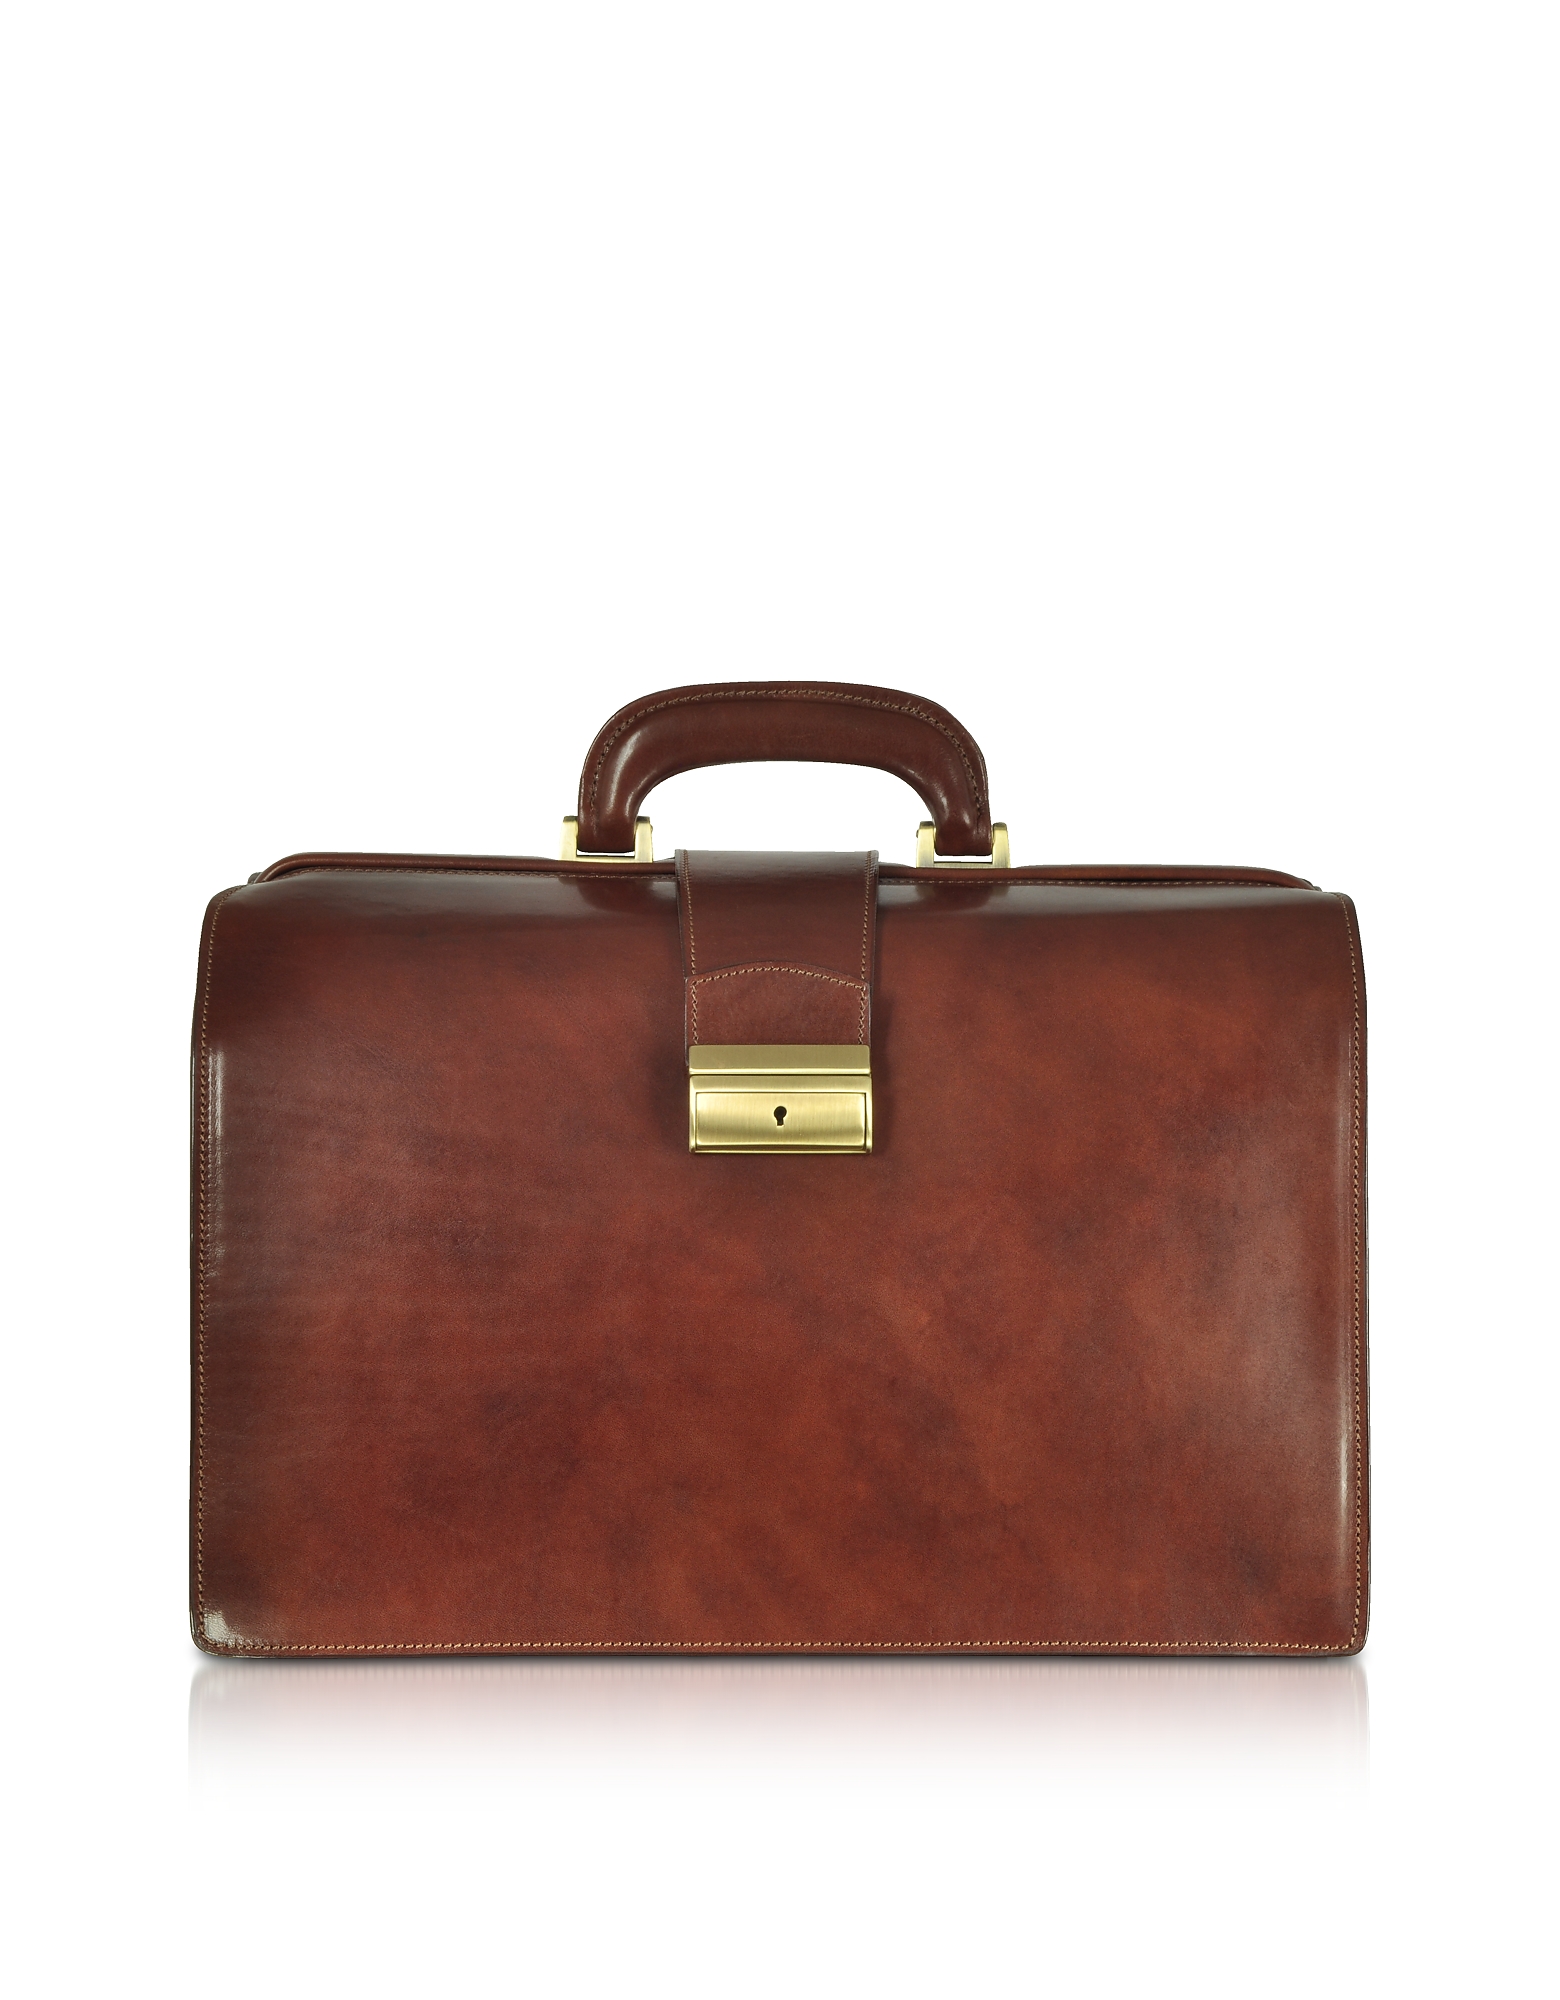 Forzieri Designer Travel Bags, Dark Brown Italian Leather Buckled Medium Doctor Bag